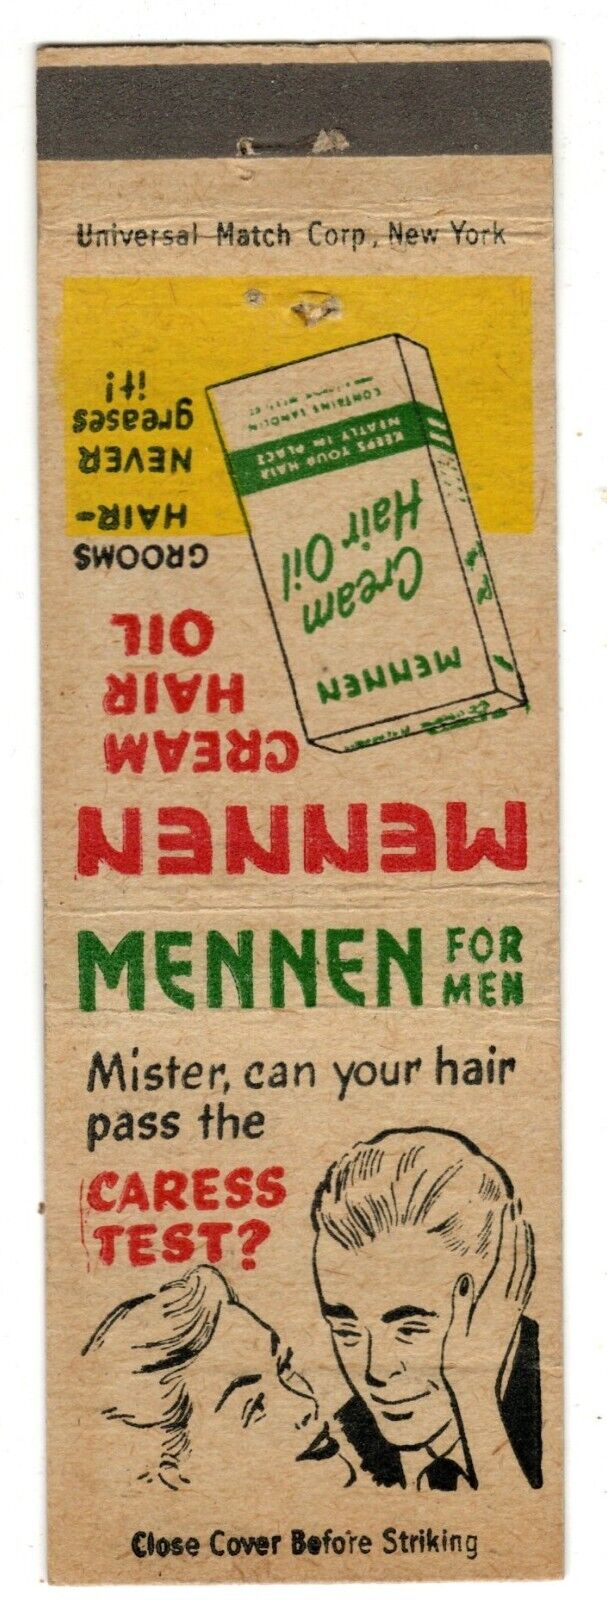 MENNEN CREAM HAIR OIL matchbook matchcover - VINTAGE ADVERTISING